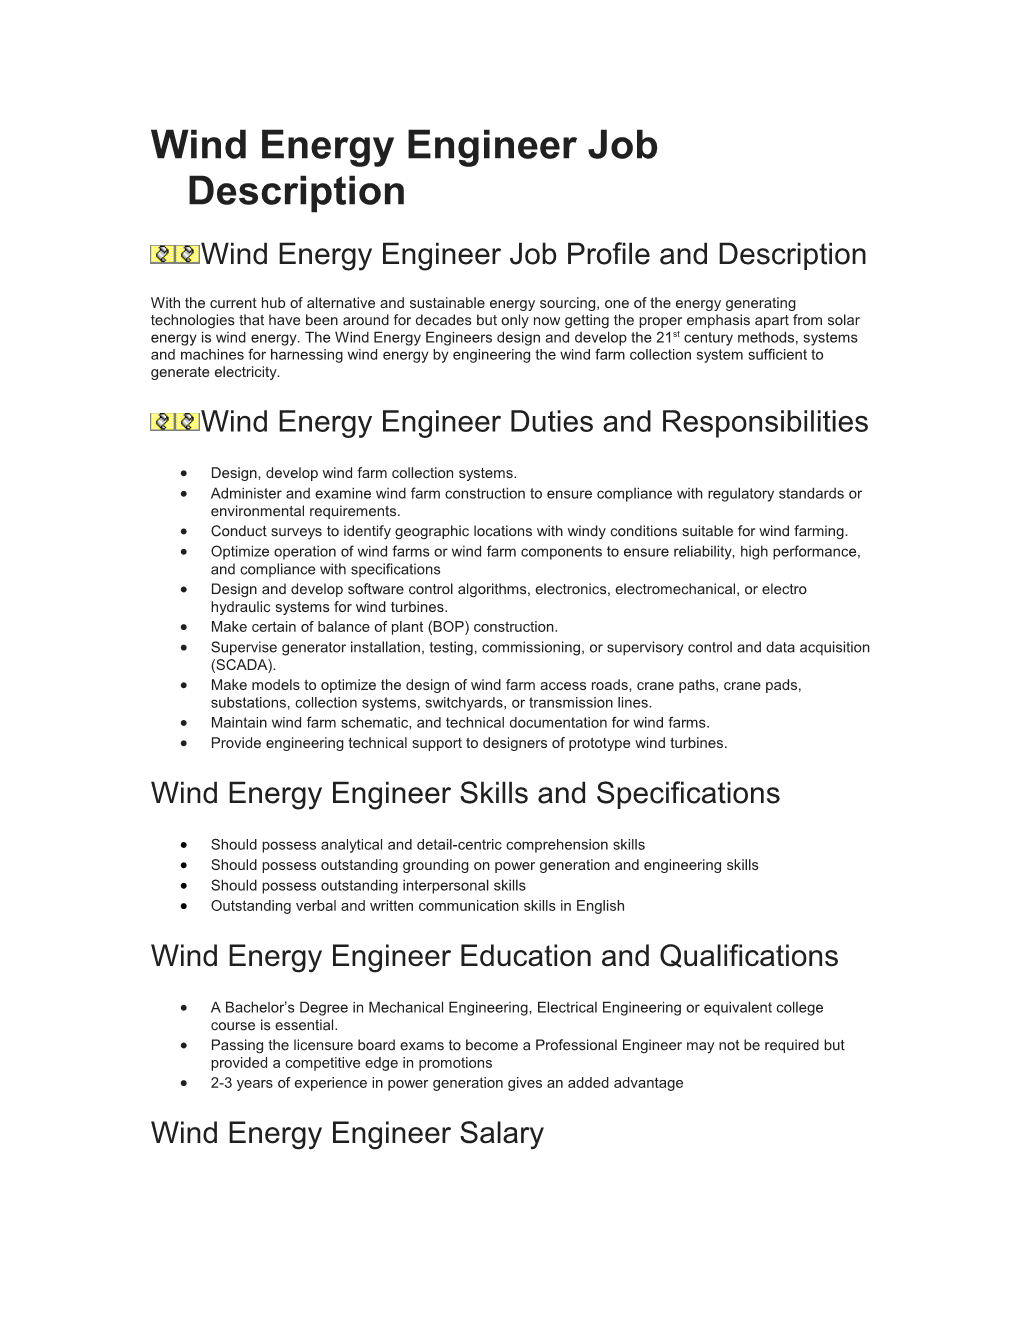 Wind Energy Engineer Job Profile and Description